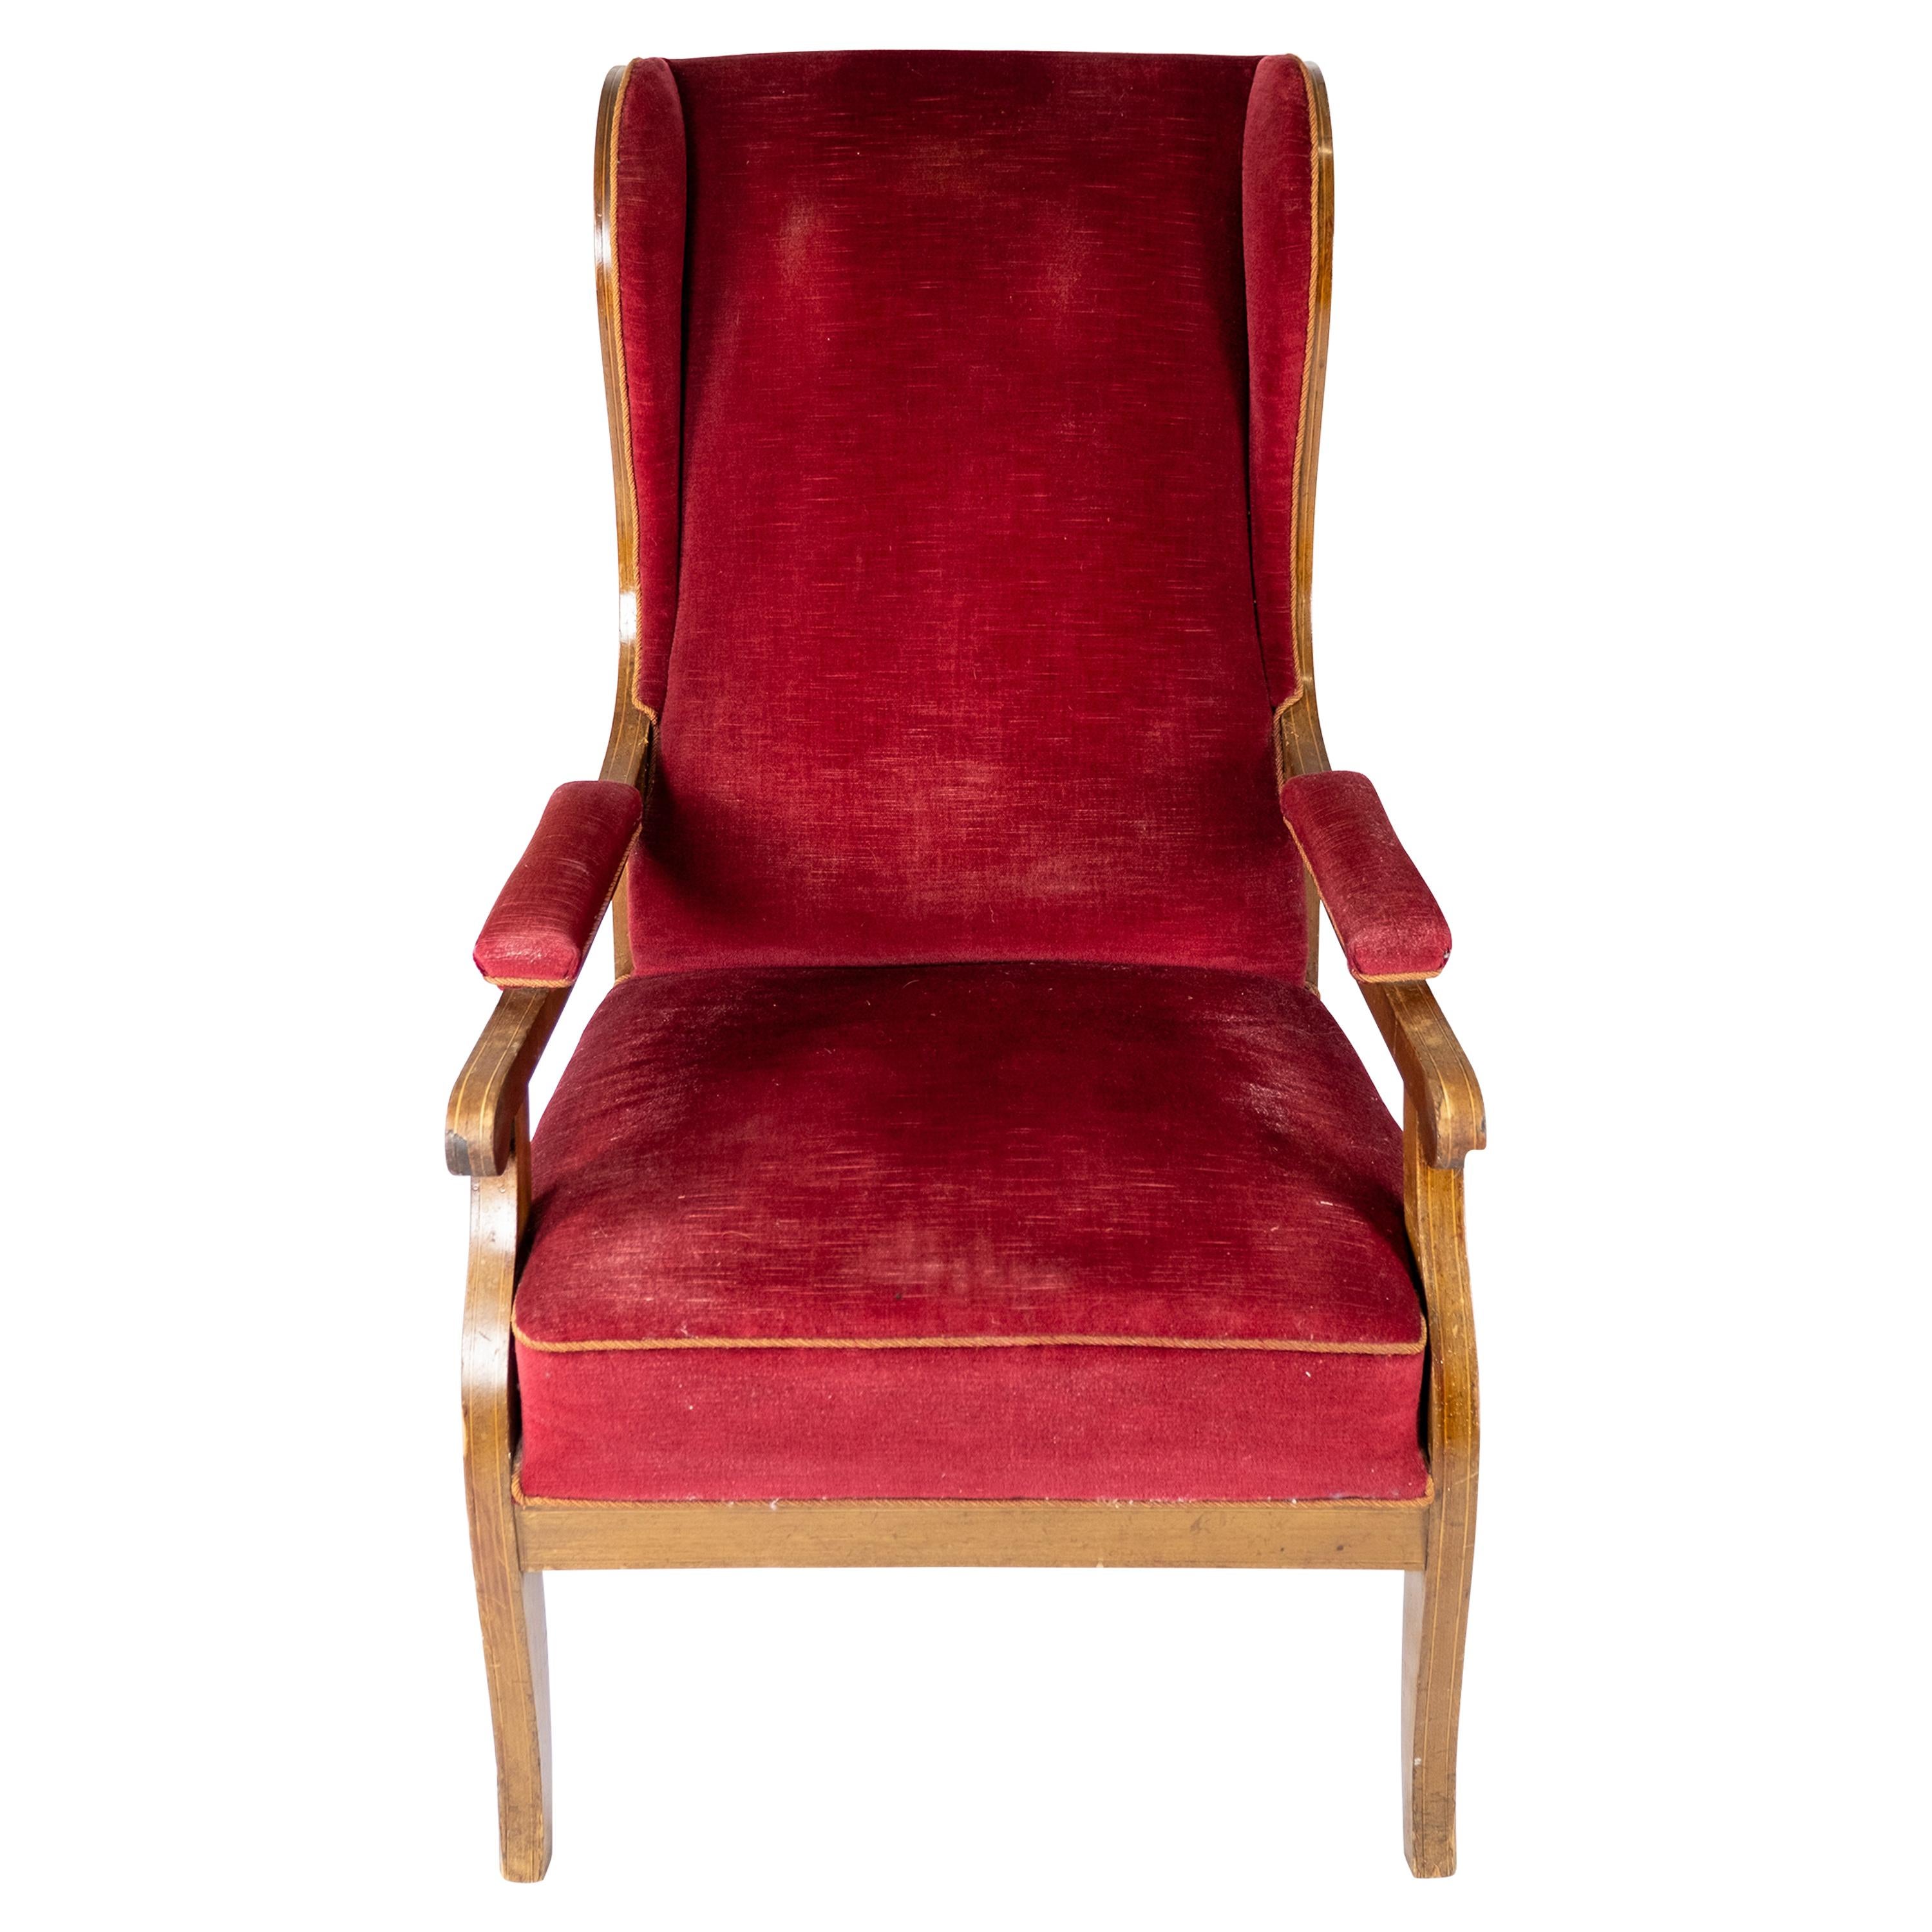 Armchair Made In Red Velvet & Mahogany Designed By Frits Henningsen From 1940s